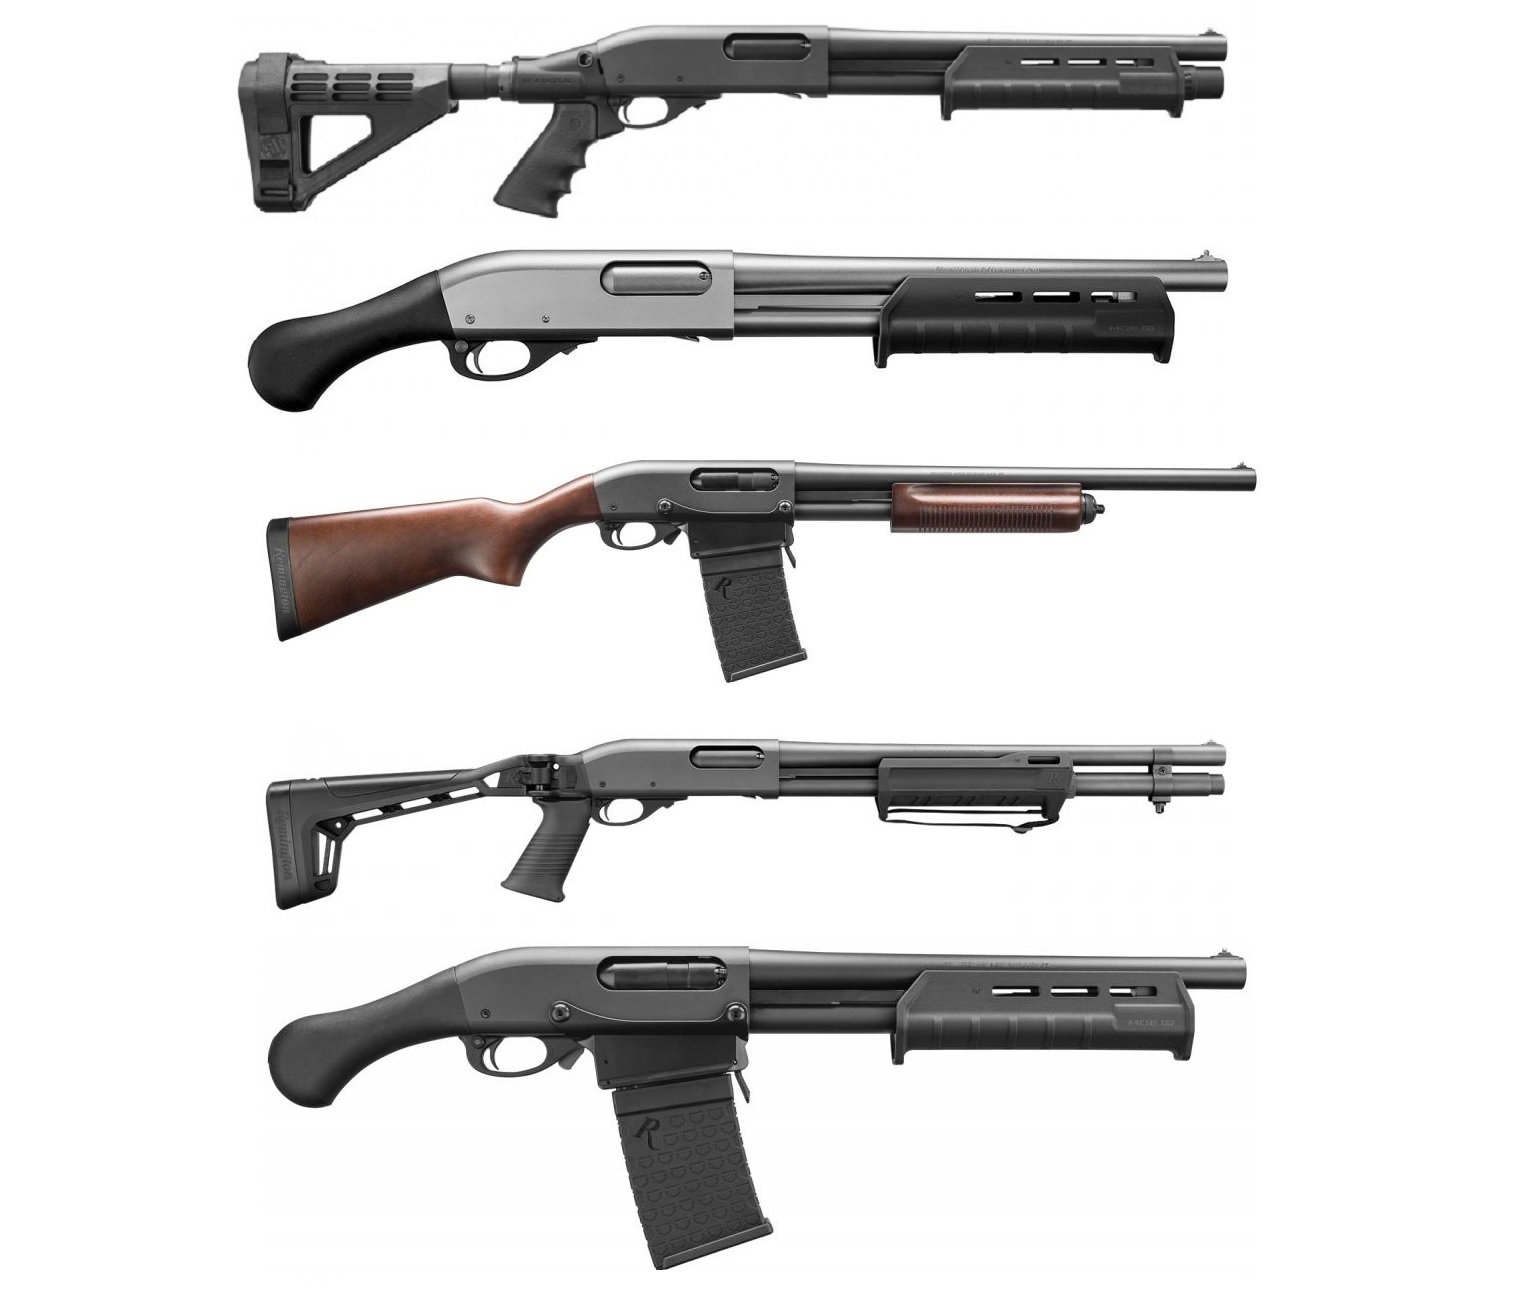 remington-870-shotguns-roundup-50-off-after-rebate-gun-deals